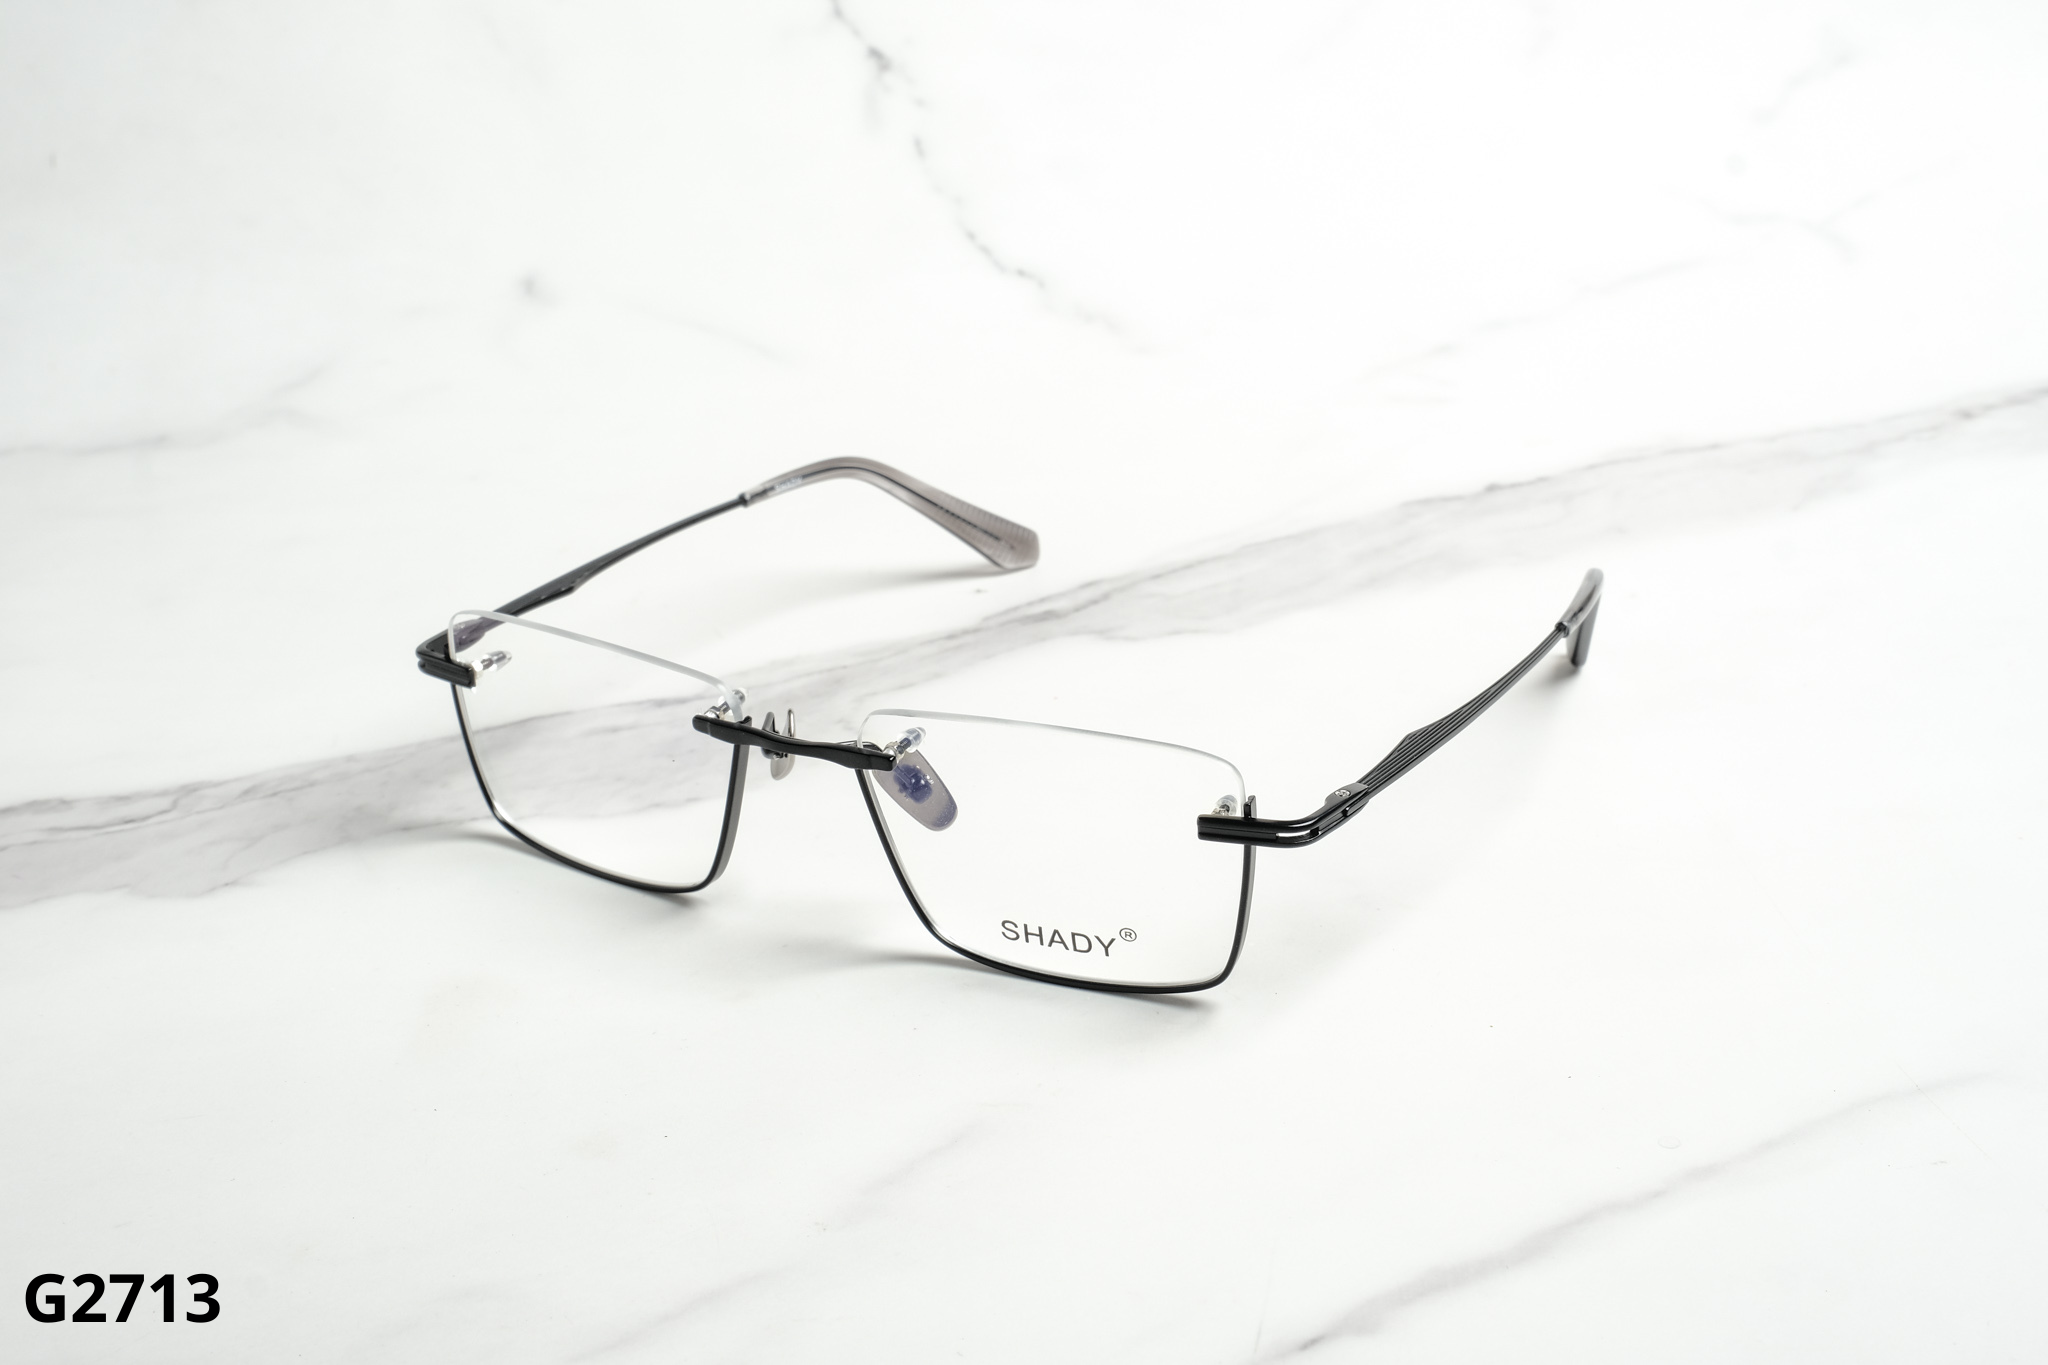  SHADY Eyewear - Glasses - G2713 